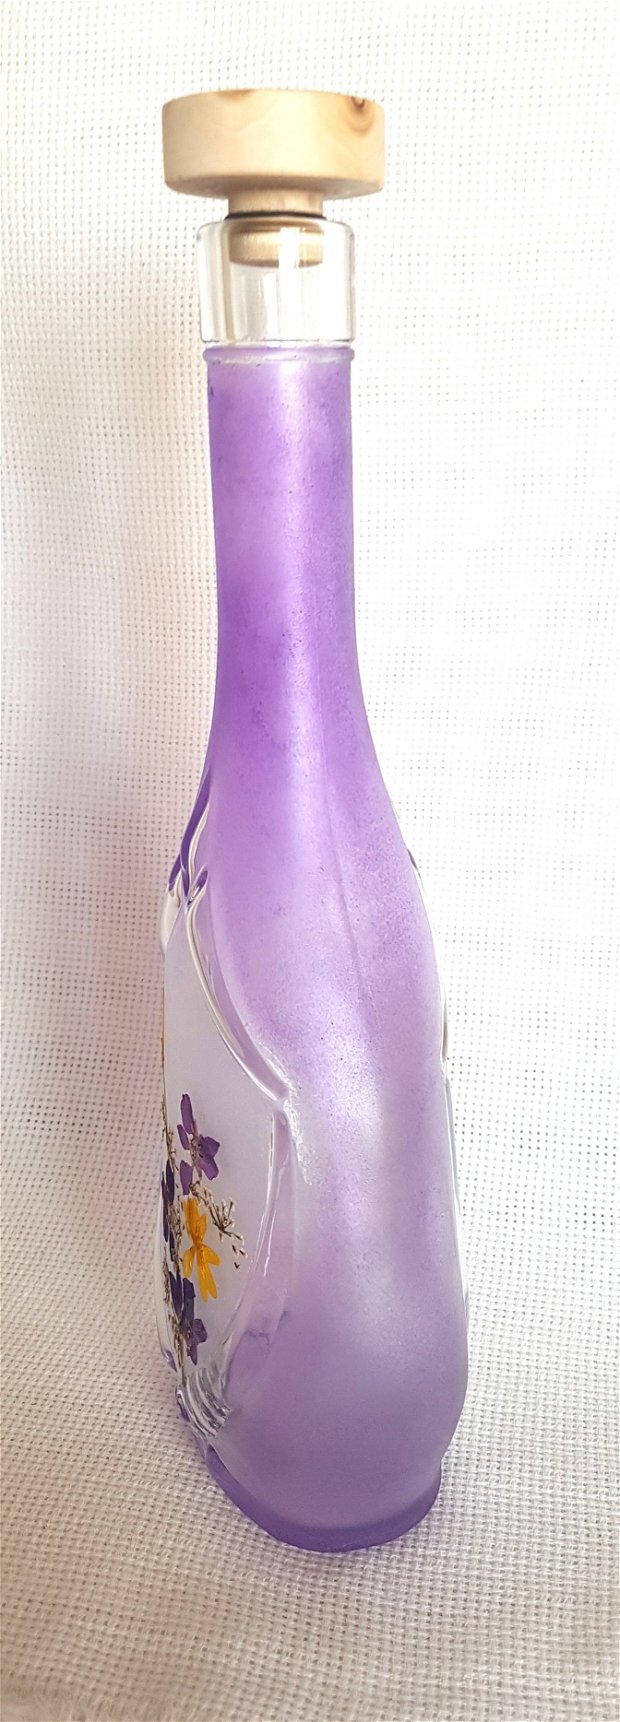 Sticla decorativa cu flori presate